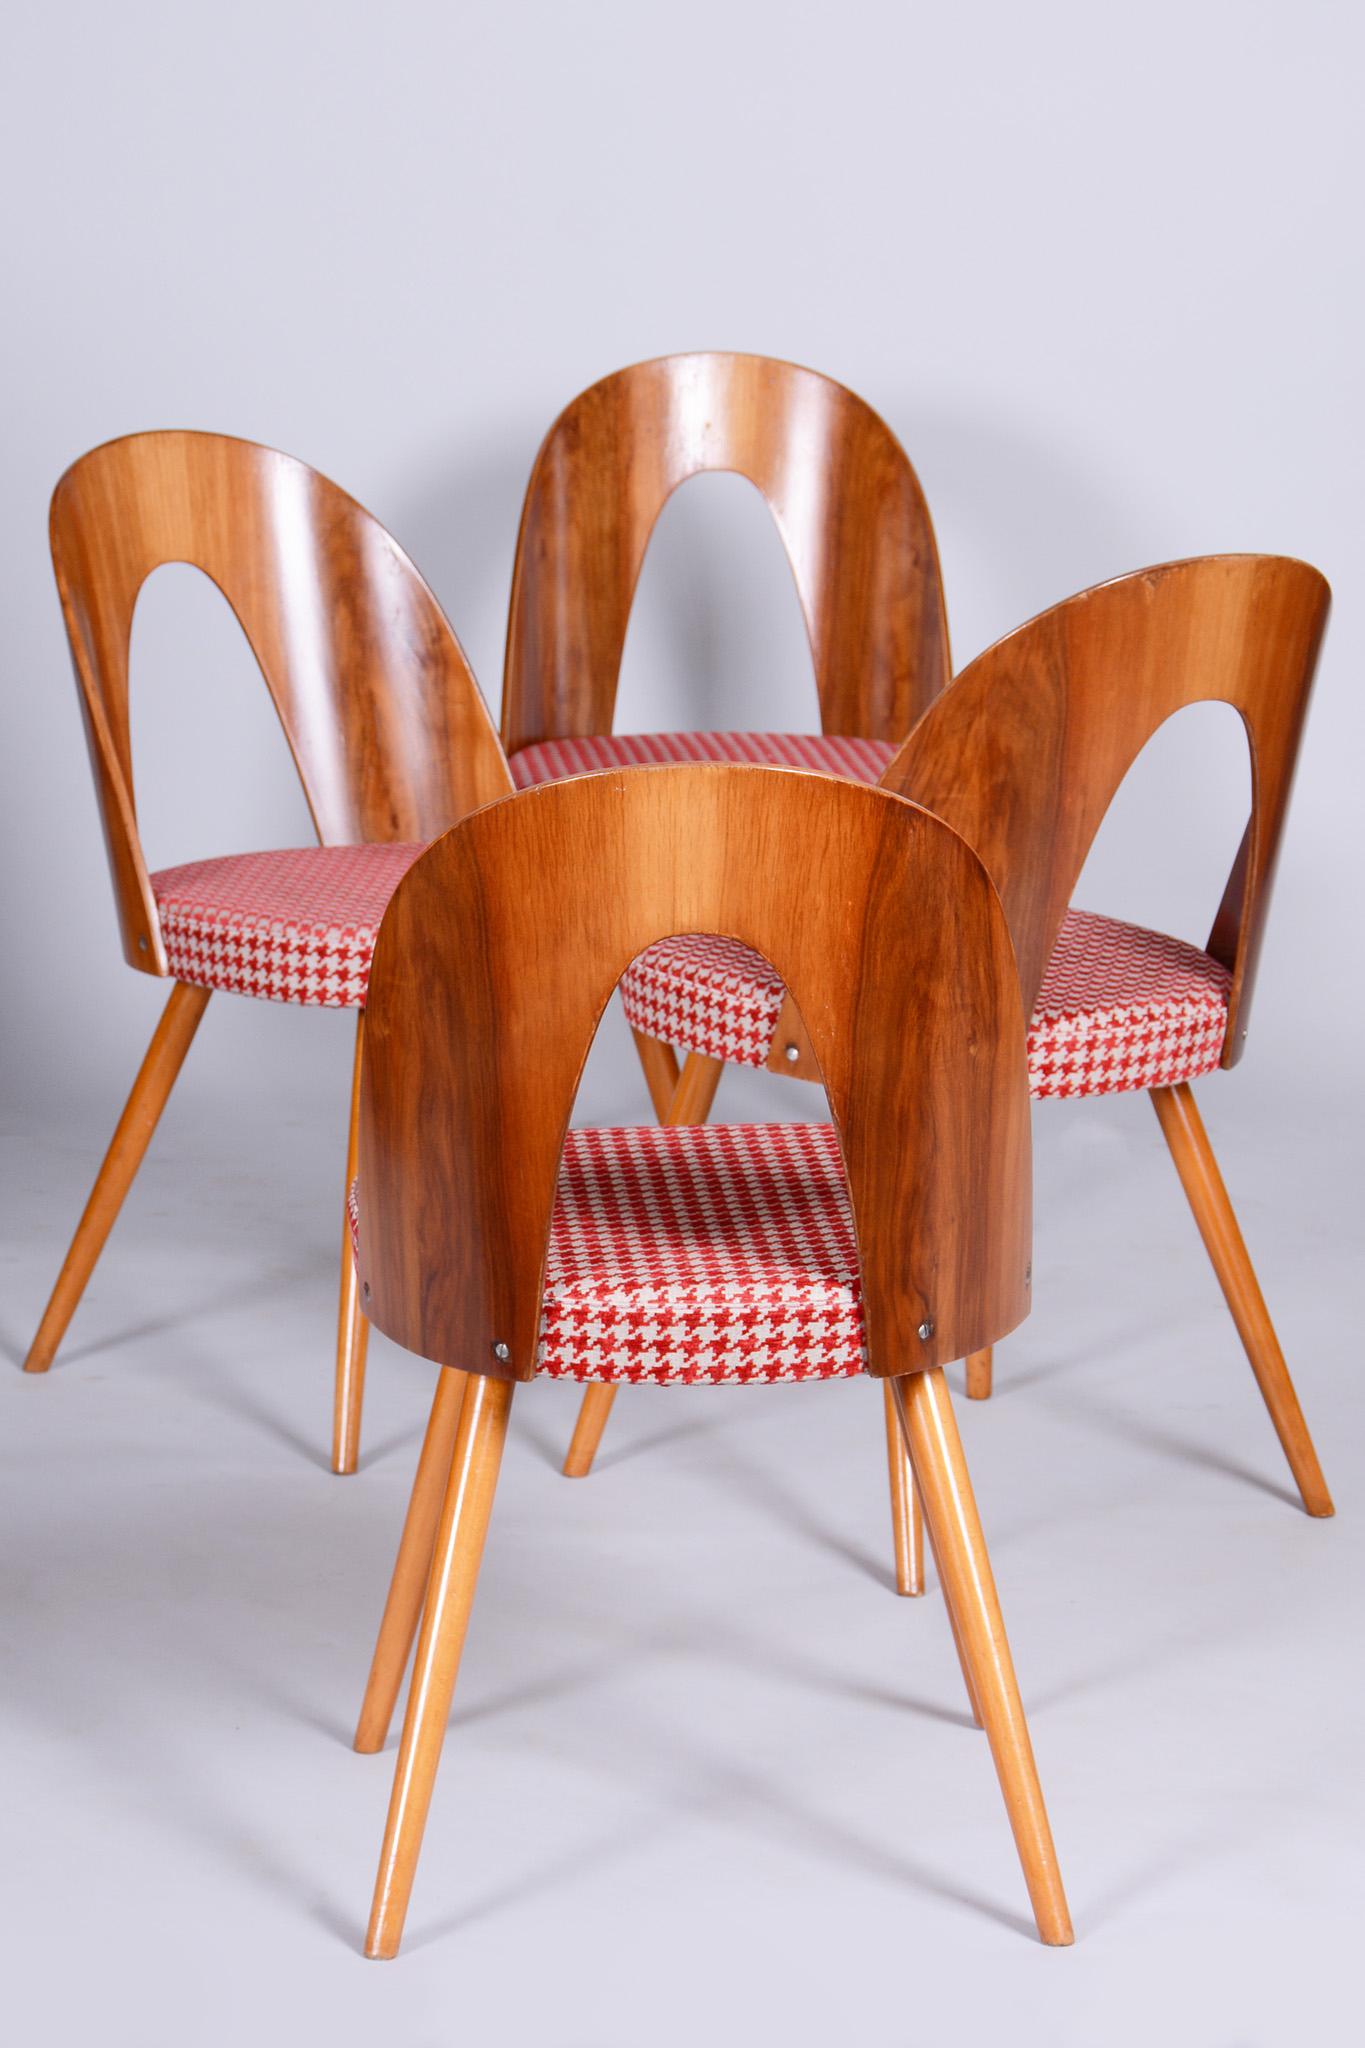 Fabric Four Restored Midcentury Chairs, Antonin Suman, Beech, Walnut, Czechia, 1950s For Sale